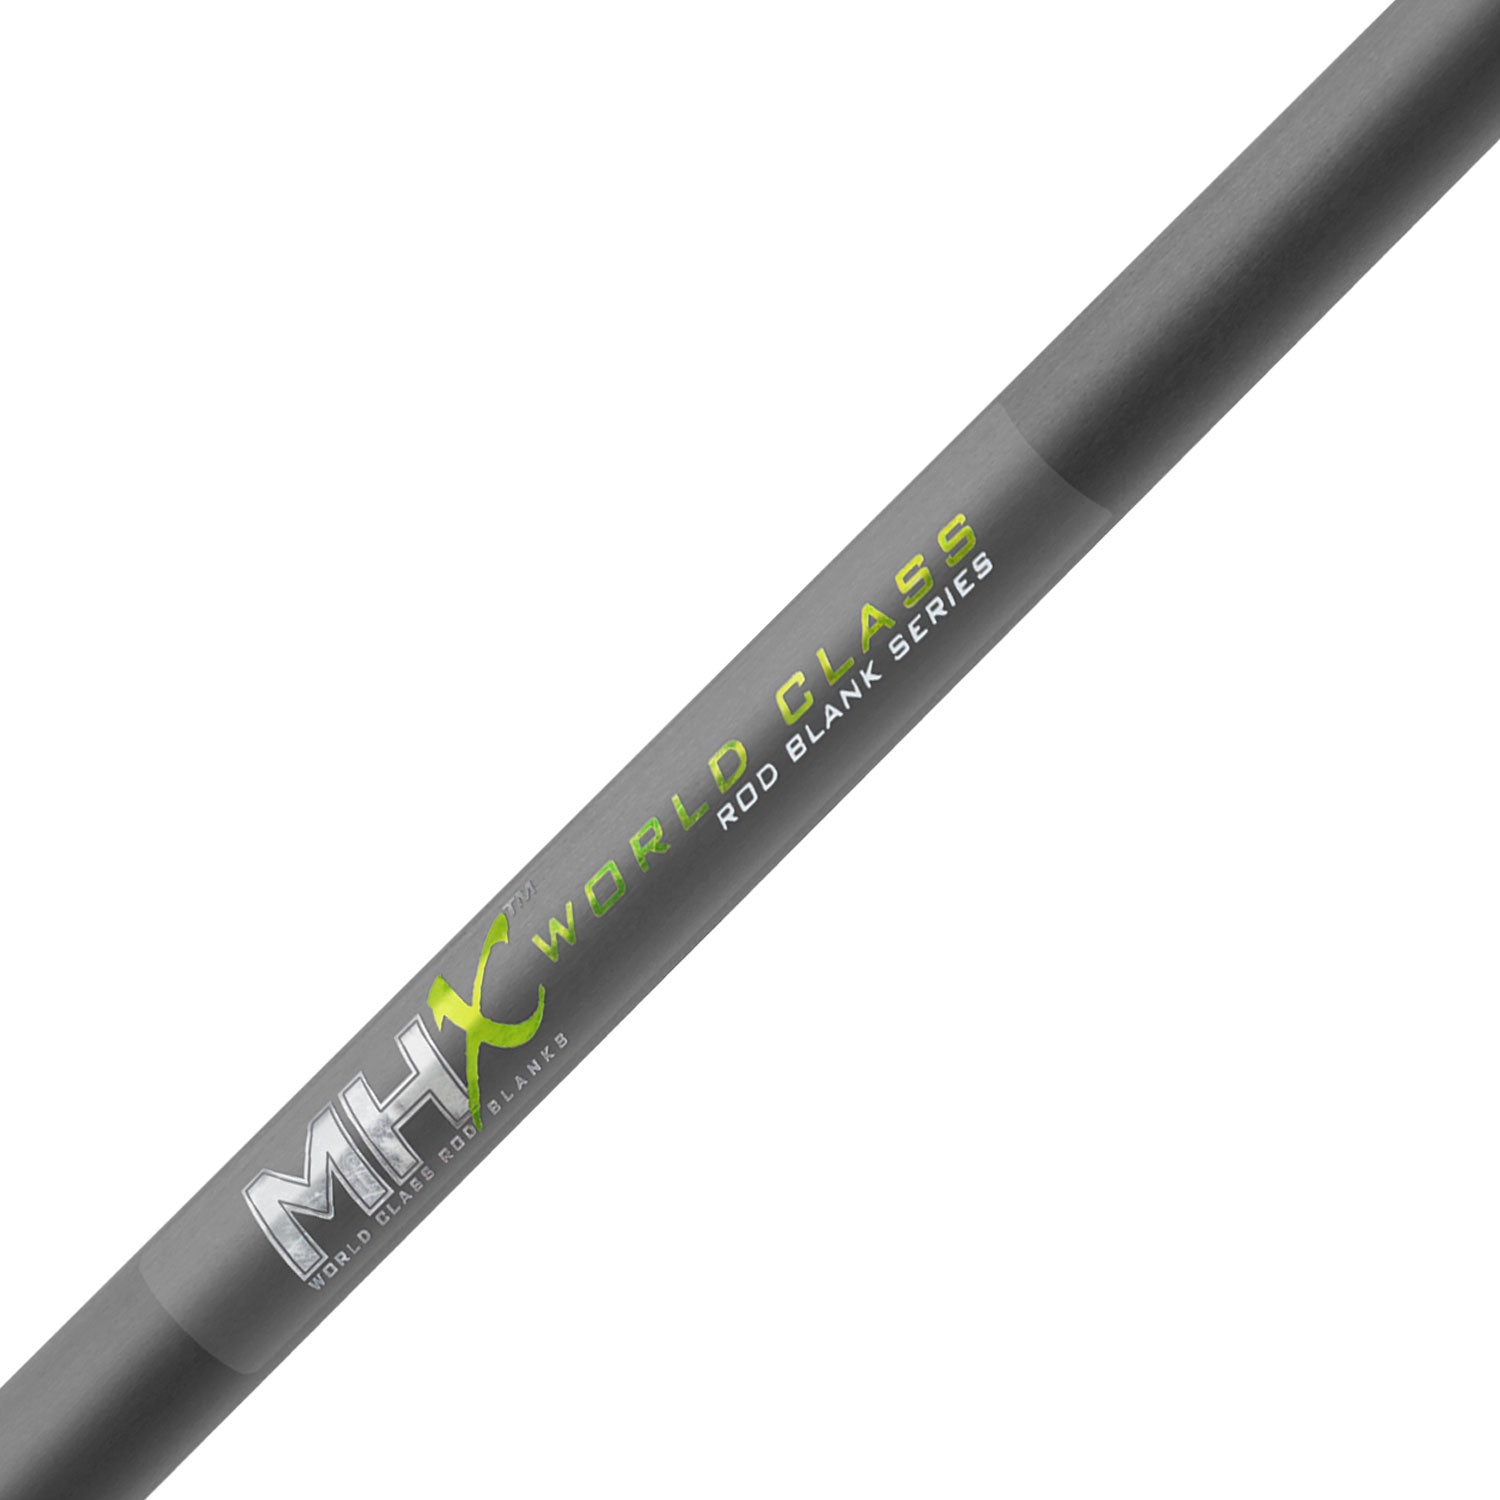 MHX 7'6" Med-Light Spin Jig Rod Blank - SJ9000-MHX